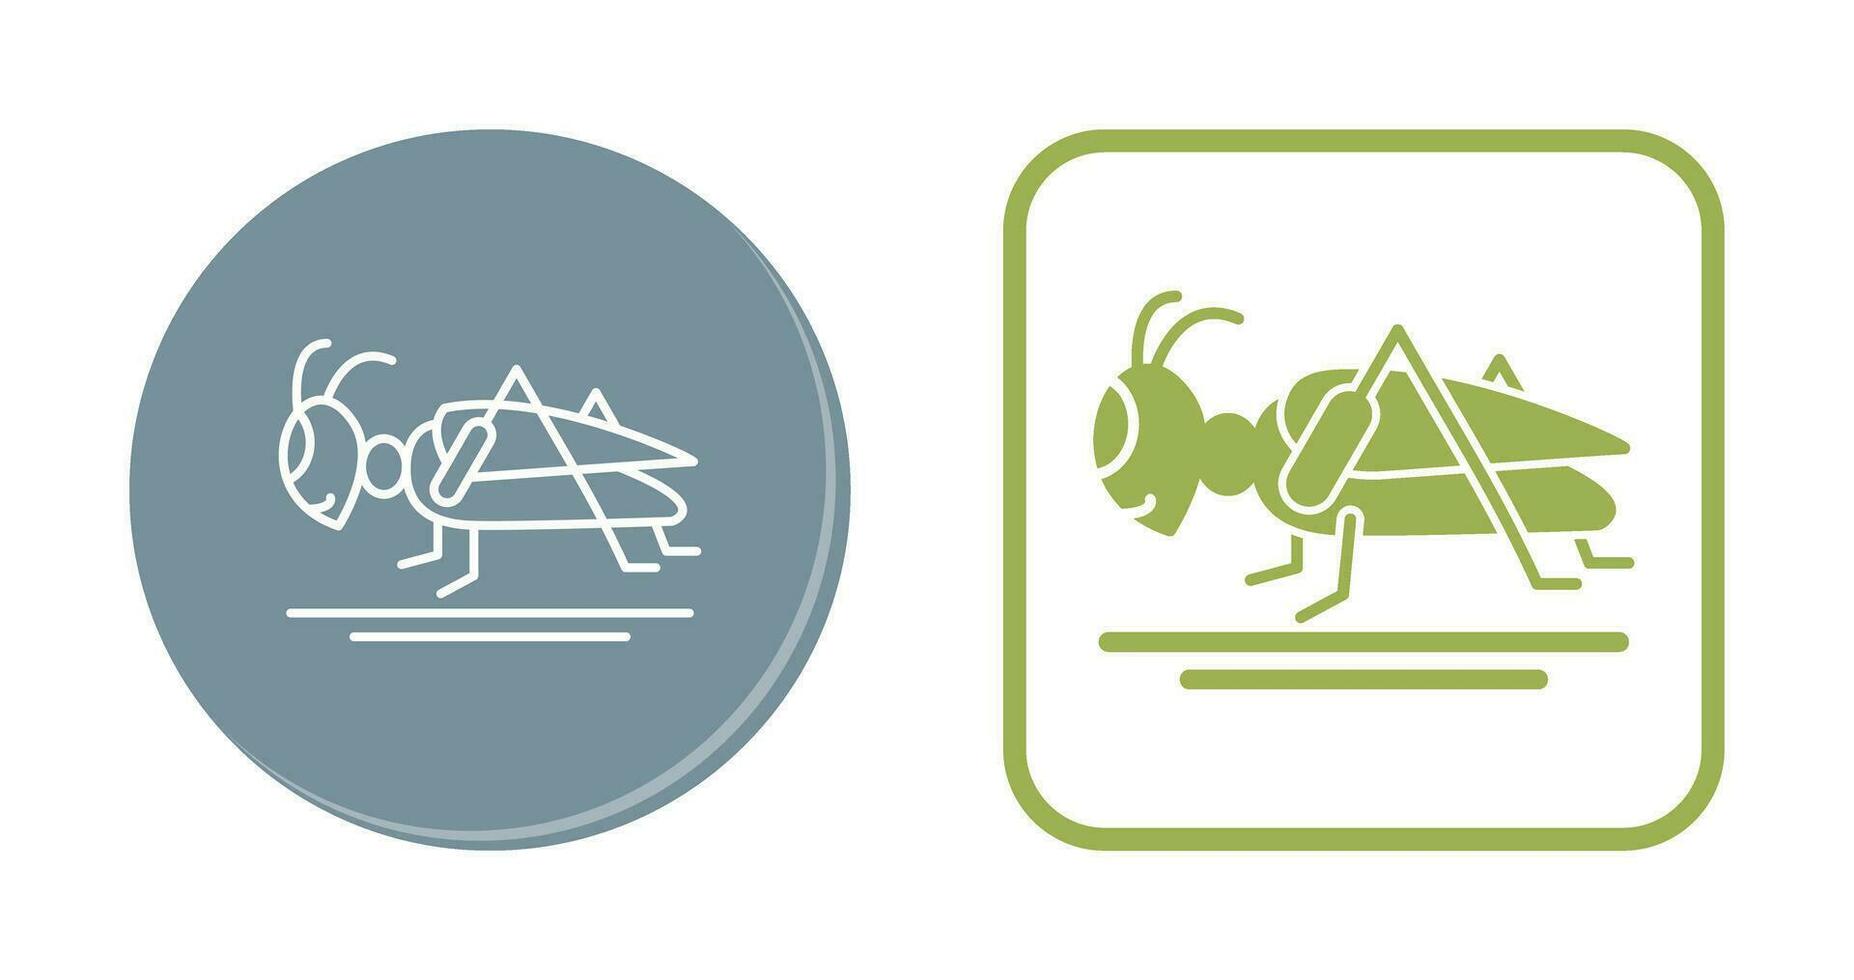 Grasshopper Vector Icon